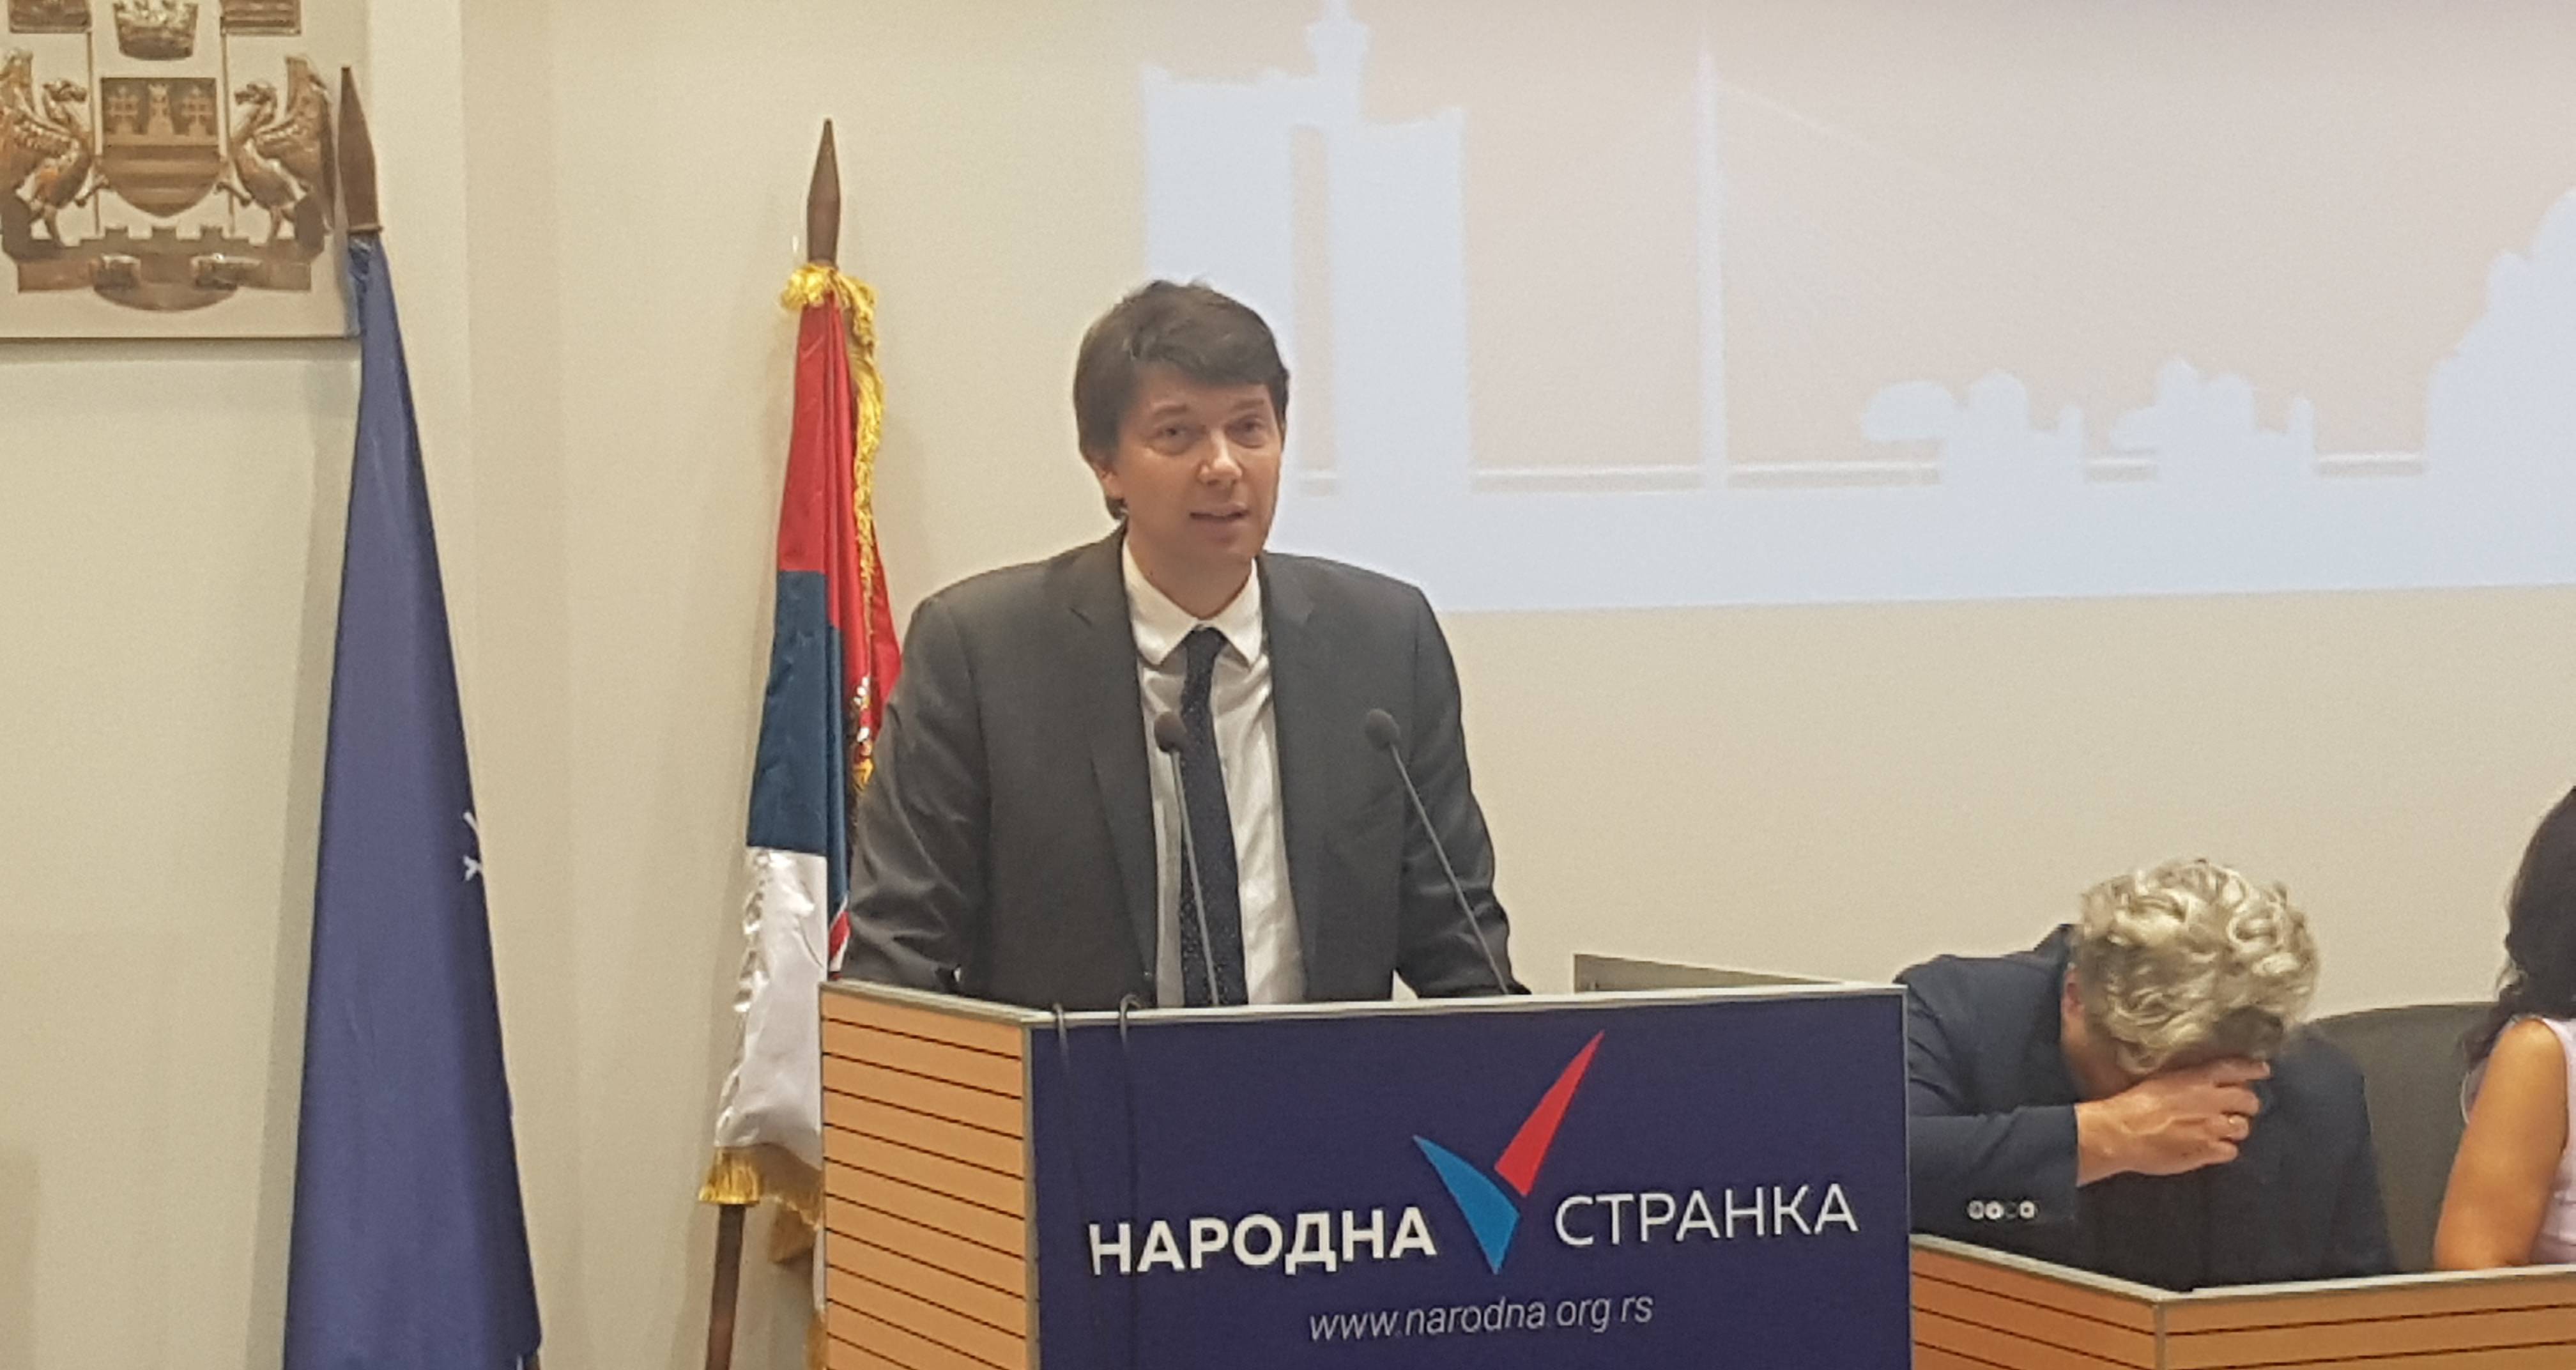 Народна странка: Основан Градски одбор Београд, Никола Јовановић председник